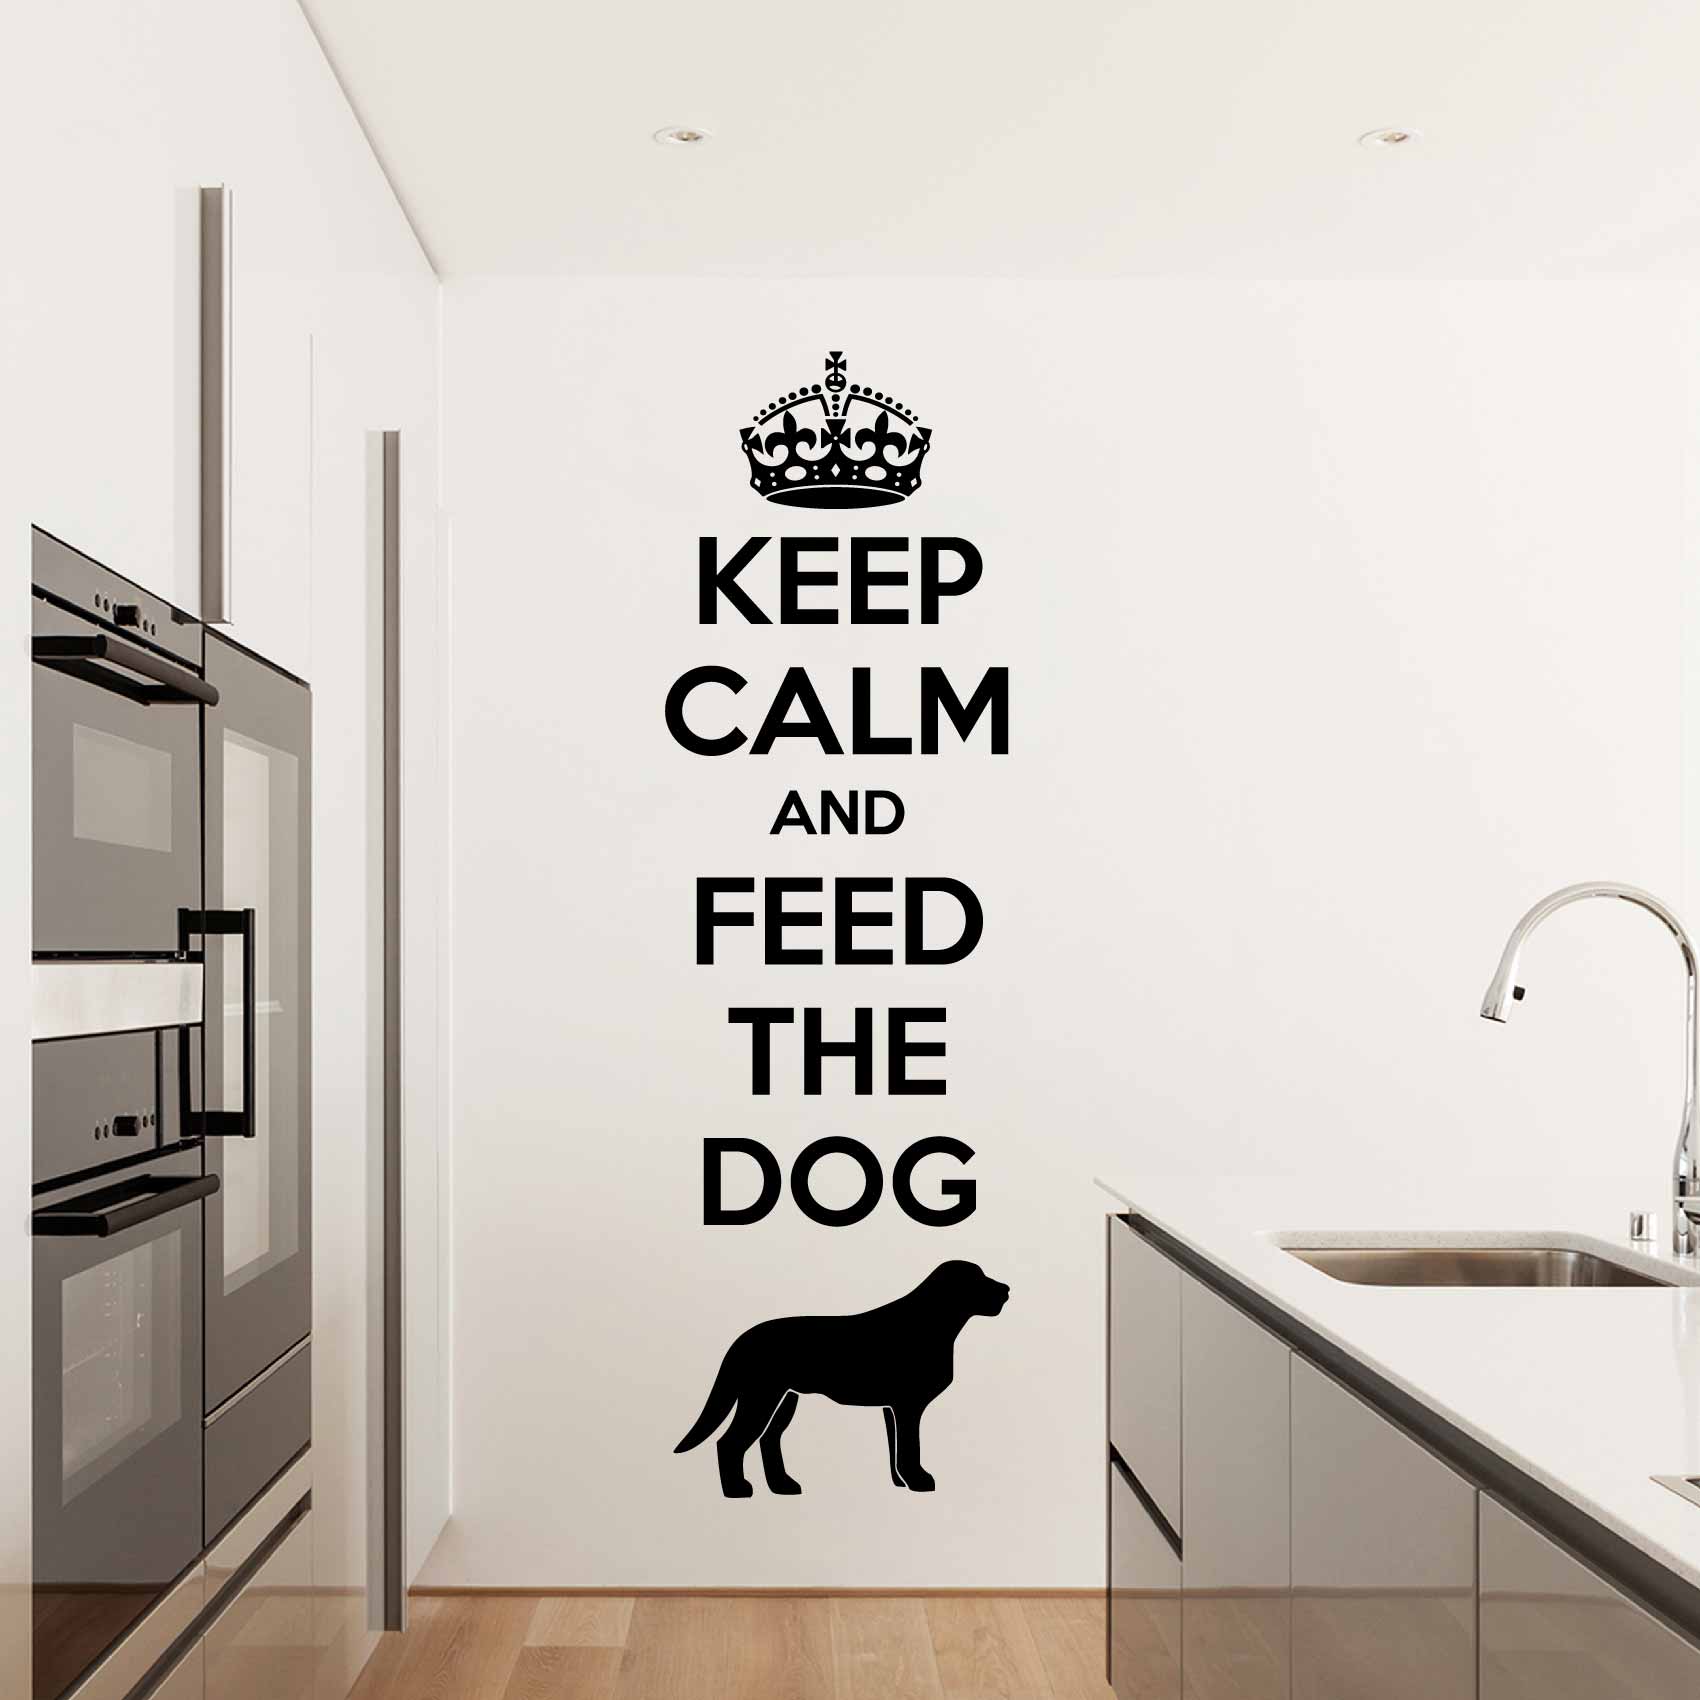 stickers-chien-labrador-keep-calm-ref3chien-autocollant-muraux-sticker-deco-feed-the-dog-cuisine-salon